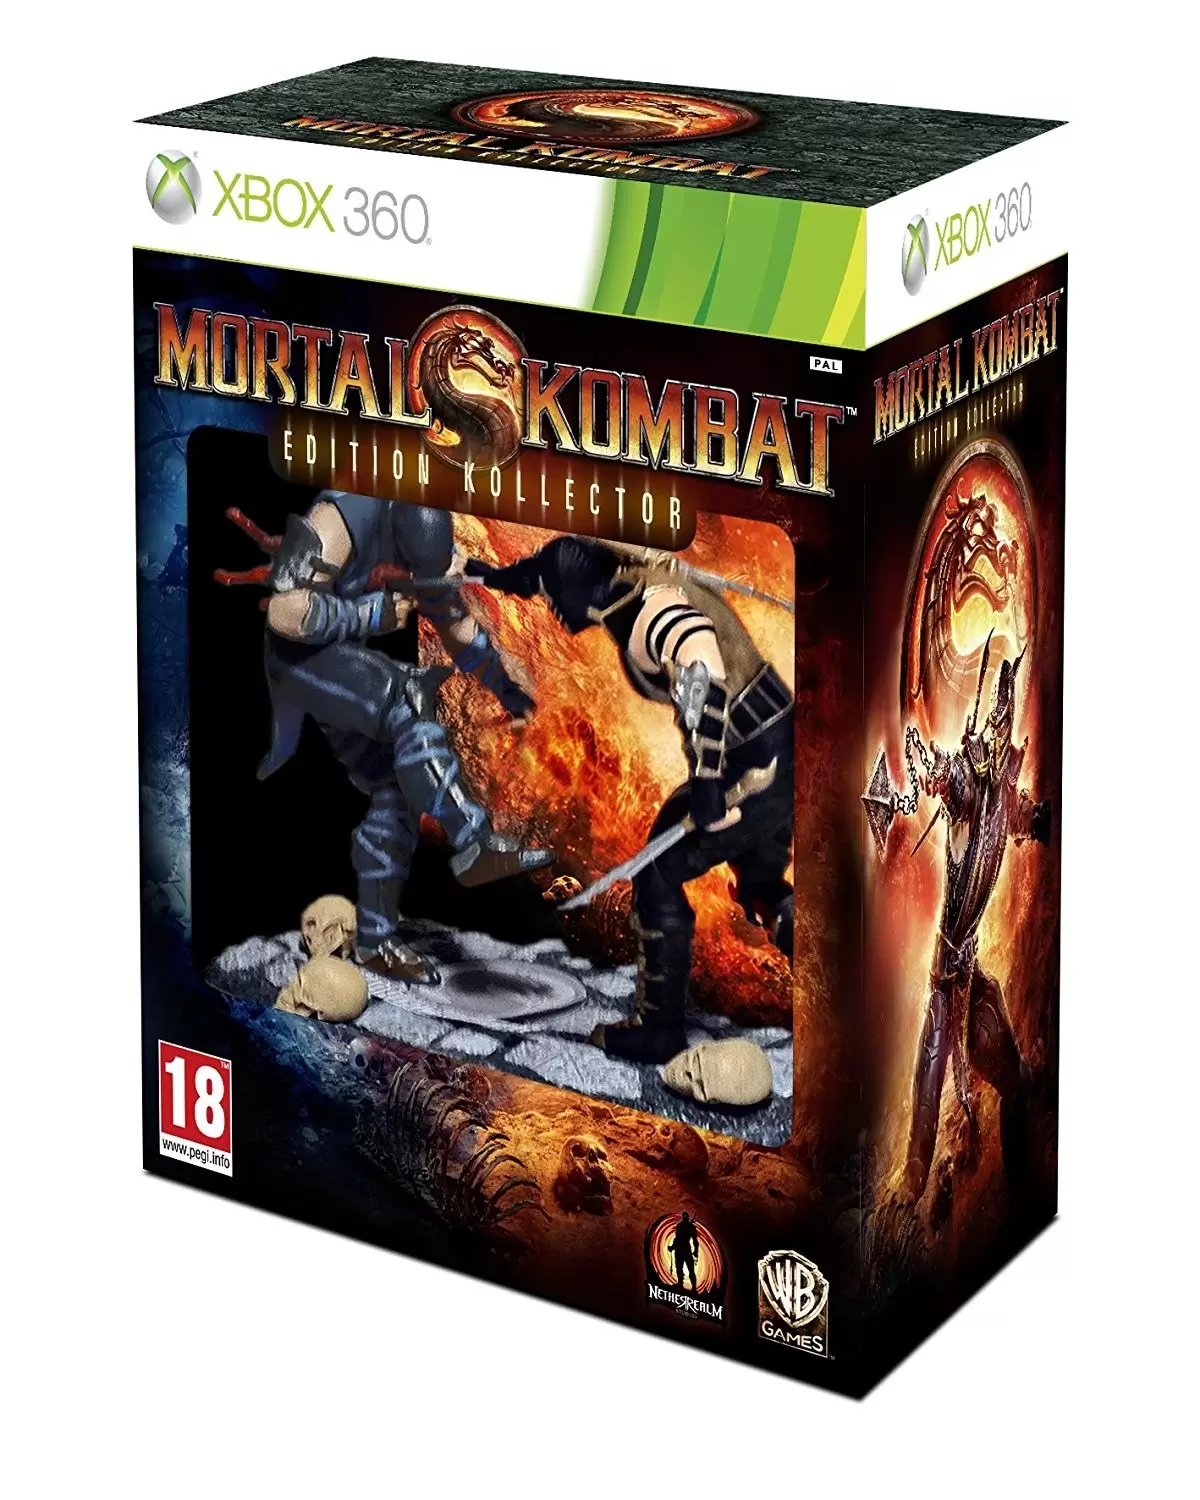 Jeux XBOX 360 - Mortal Kombat : Edition Kollector